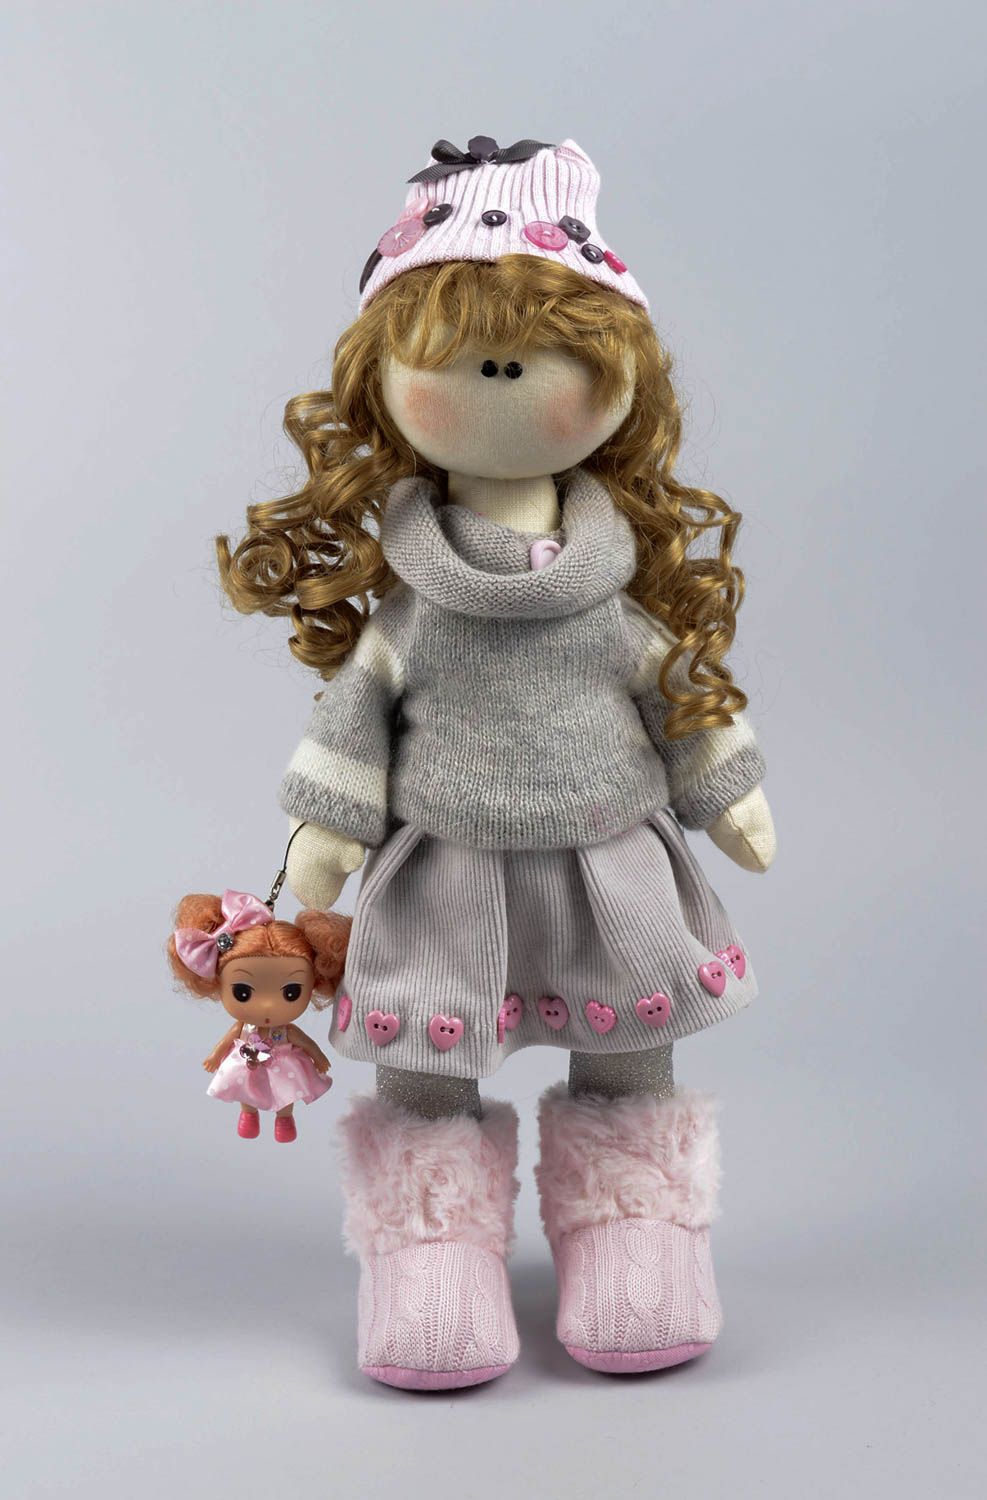 Unusual handmade soft toy for kids rag doll for girls birthday gift ideas photo 1